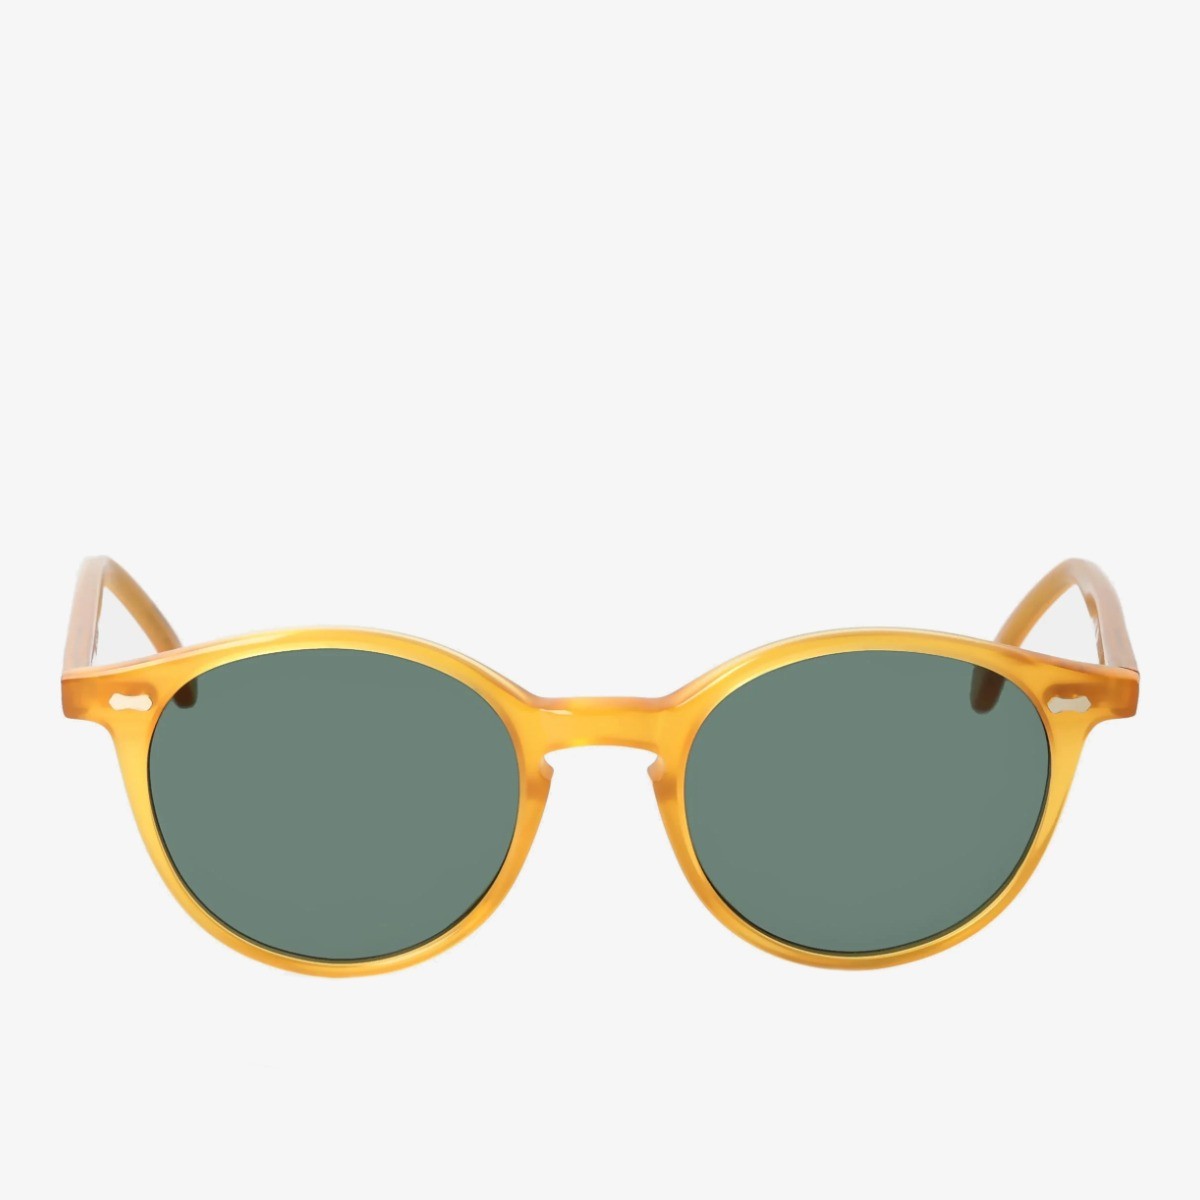 TBD Eyewear Cran yellow frame green lenses sunglasses